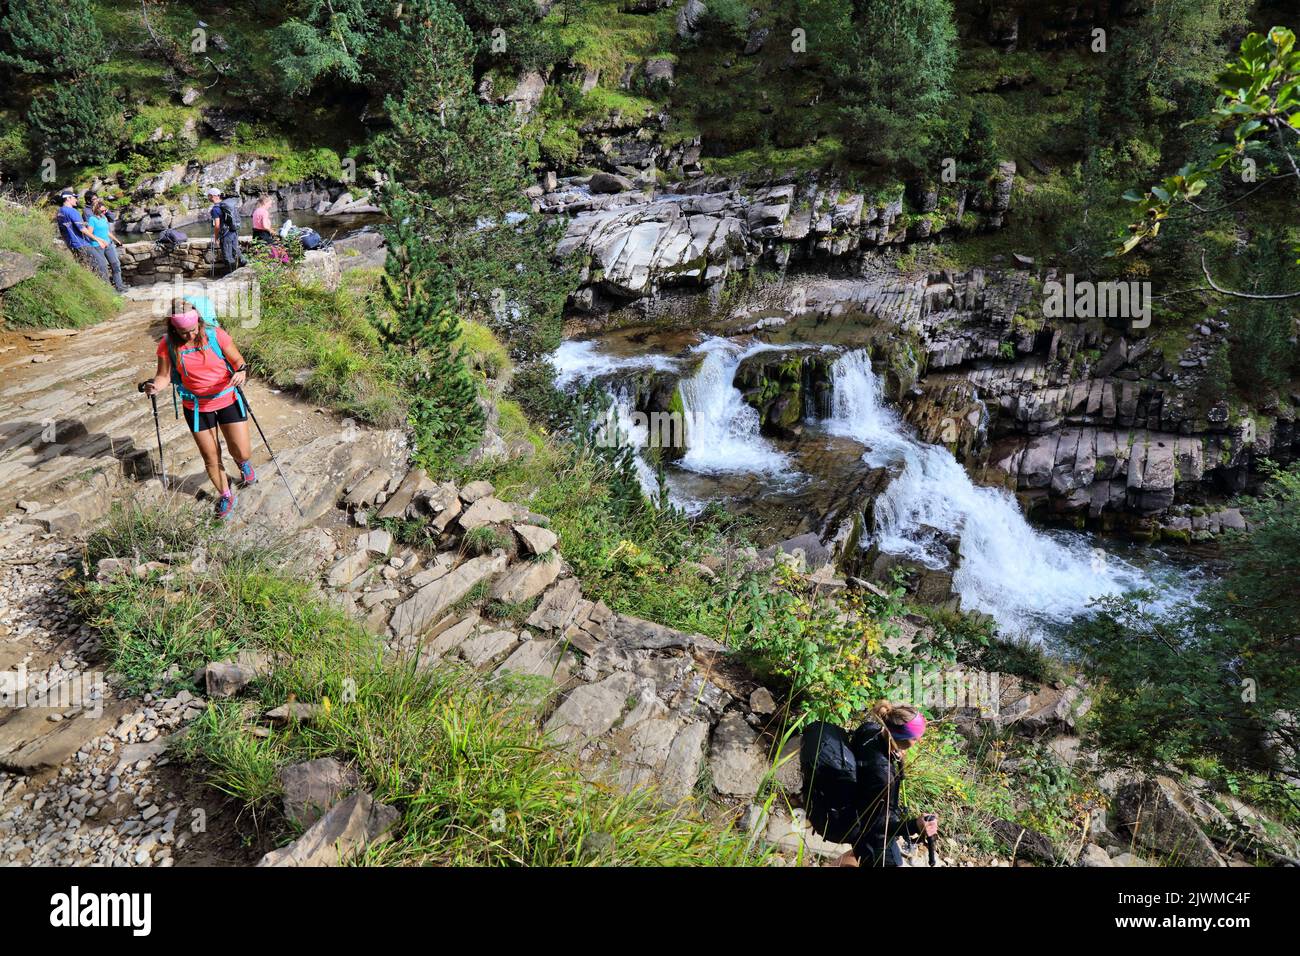 PYRENEES, SPAIN - SEPTEMBER 26, 2021: Hikers visit watefalls along Senda de Los Cazadores hiking trail in Ordesa y Monte Perdido National Park in Pyre Stock Photo